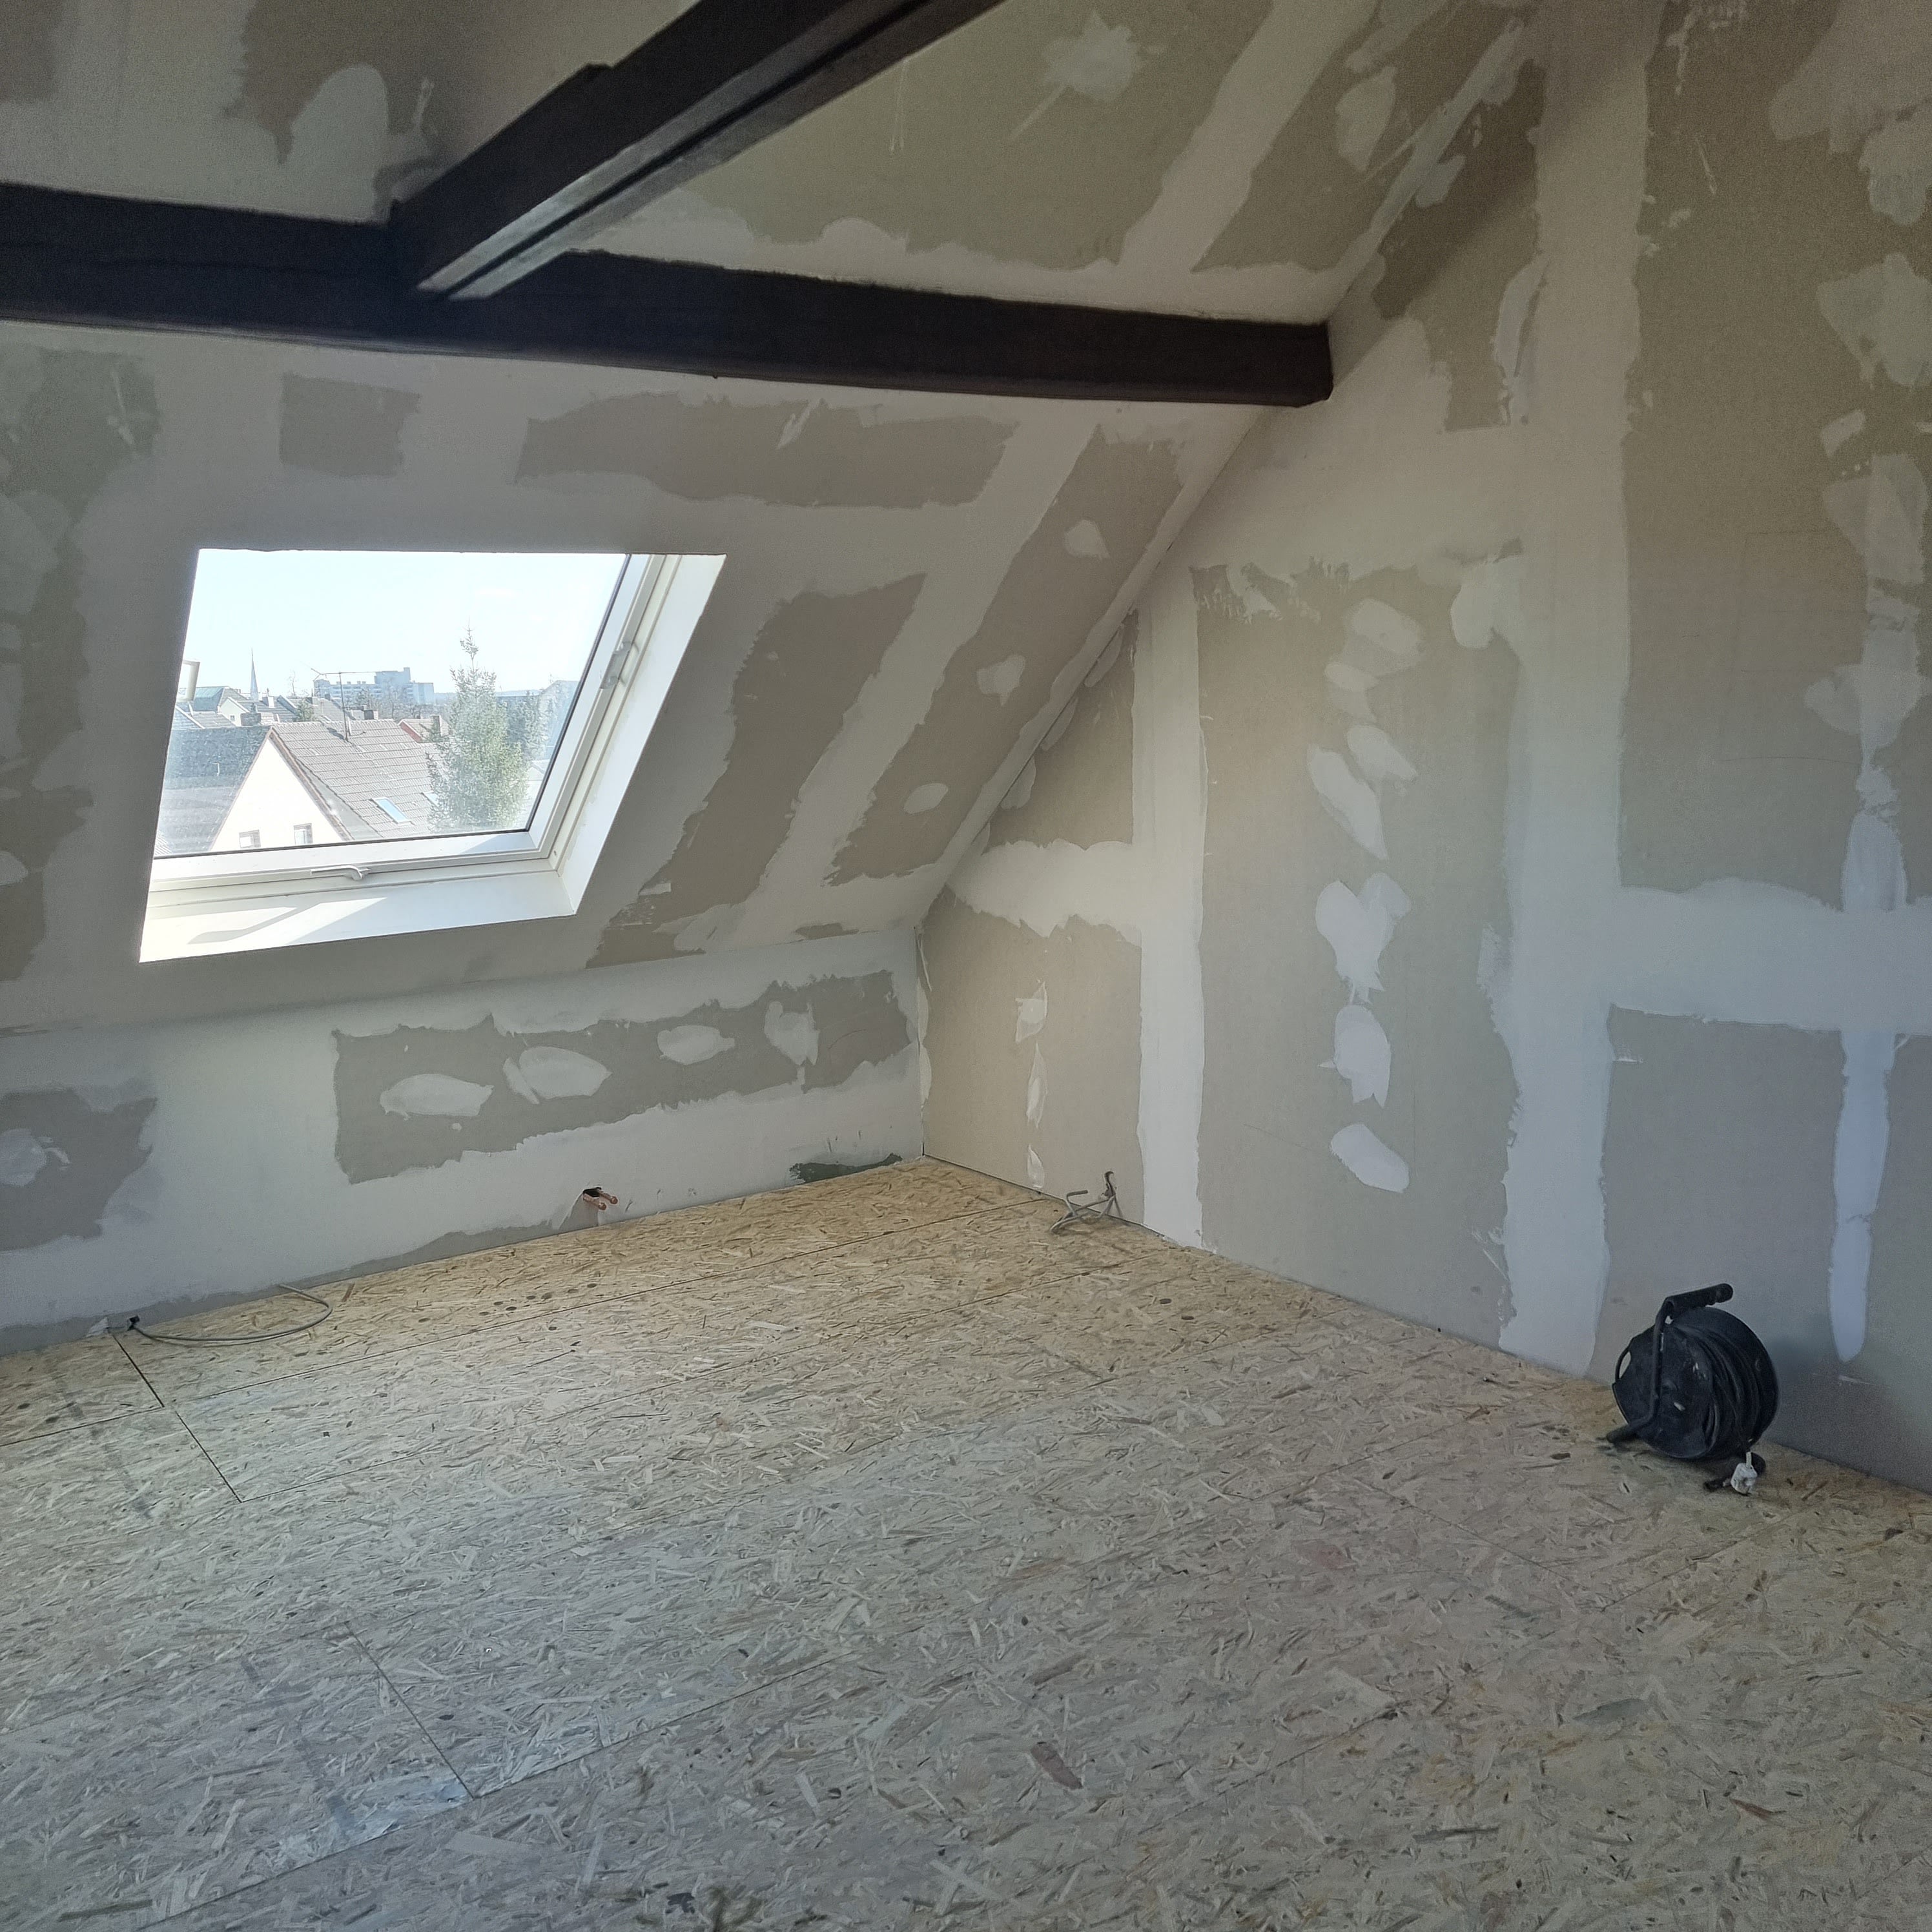 Ein Dachboden im Sanierungsprozess von Guido Breitbach. Walls are almost finished. The Wallpapers are missing.